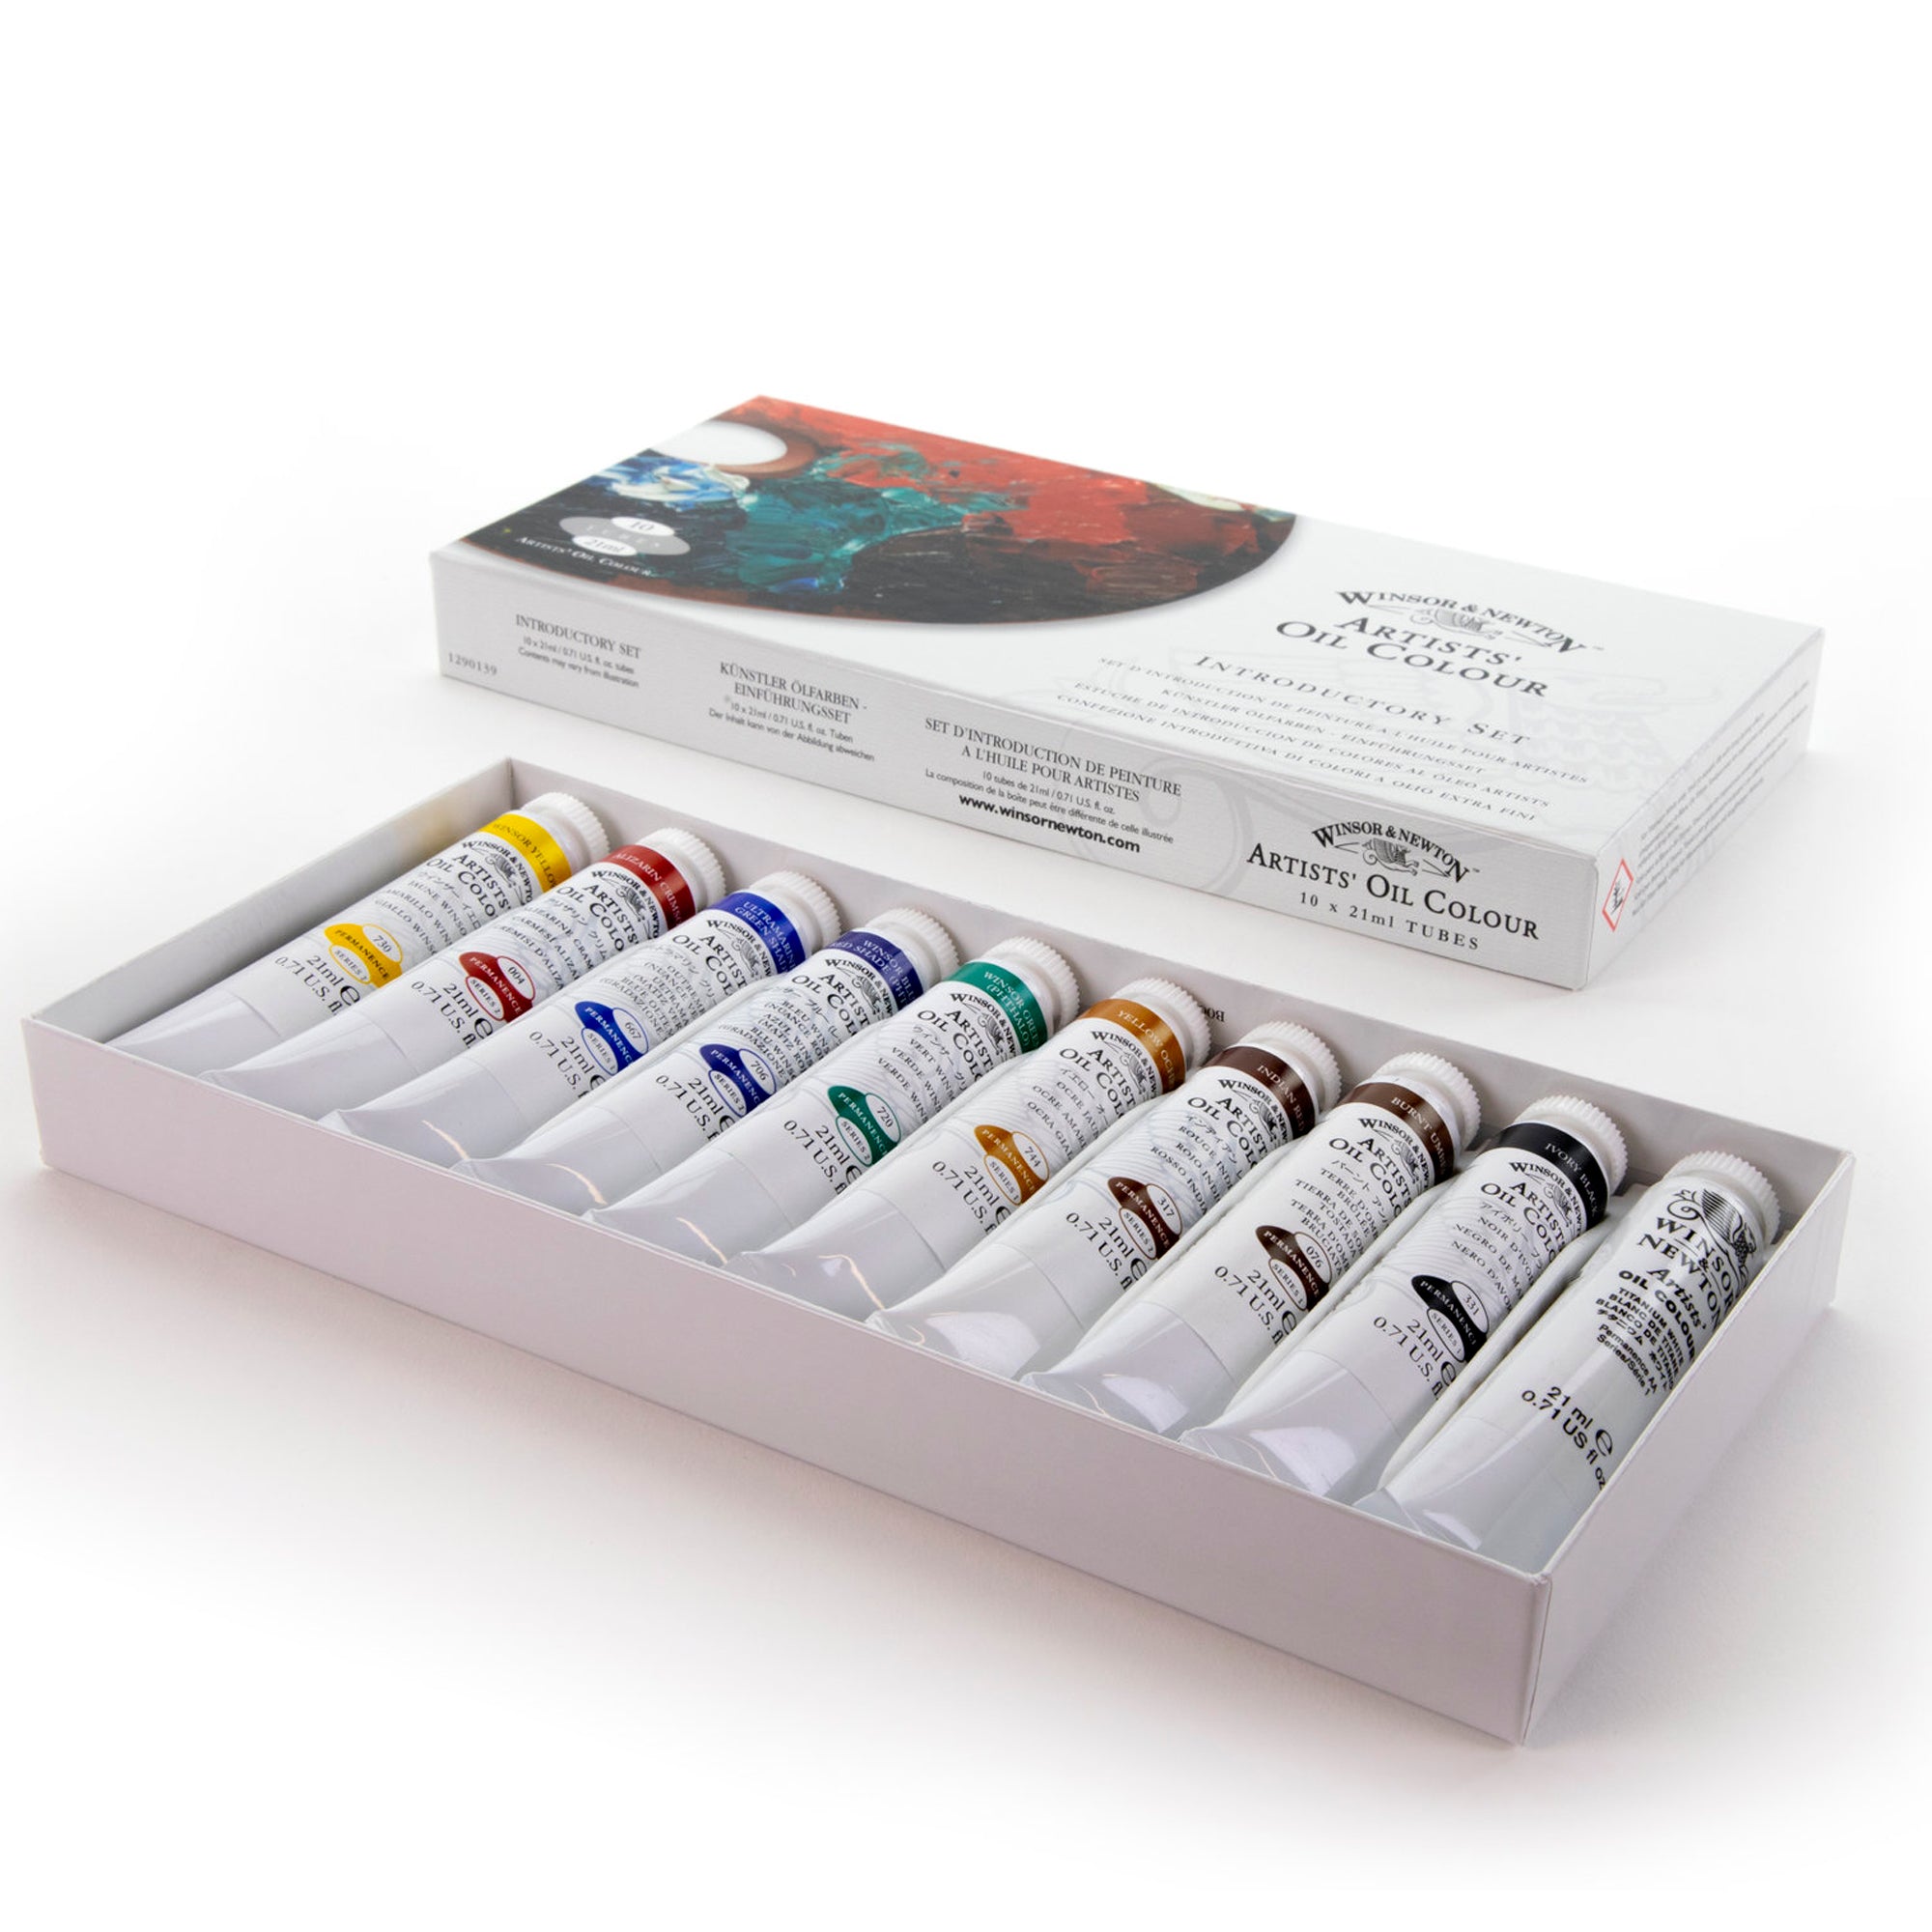 Winsor & Newton Artists Oil Colour Introductory Set - 10 x 21ml tubes